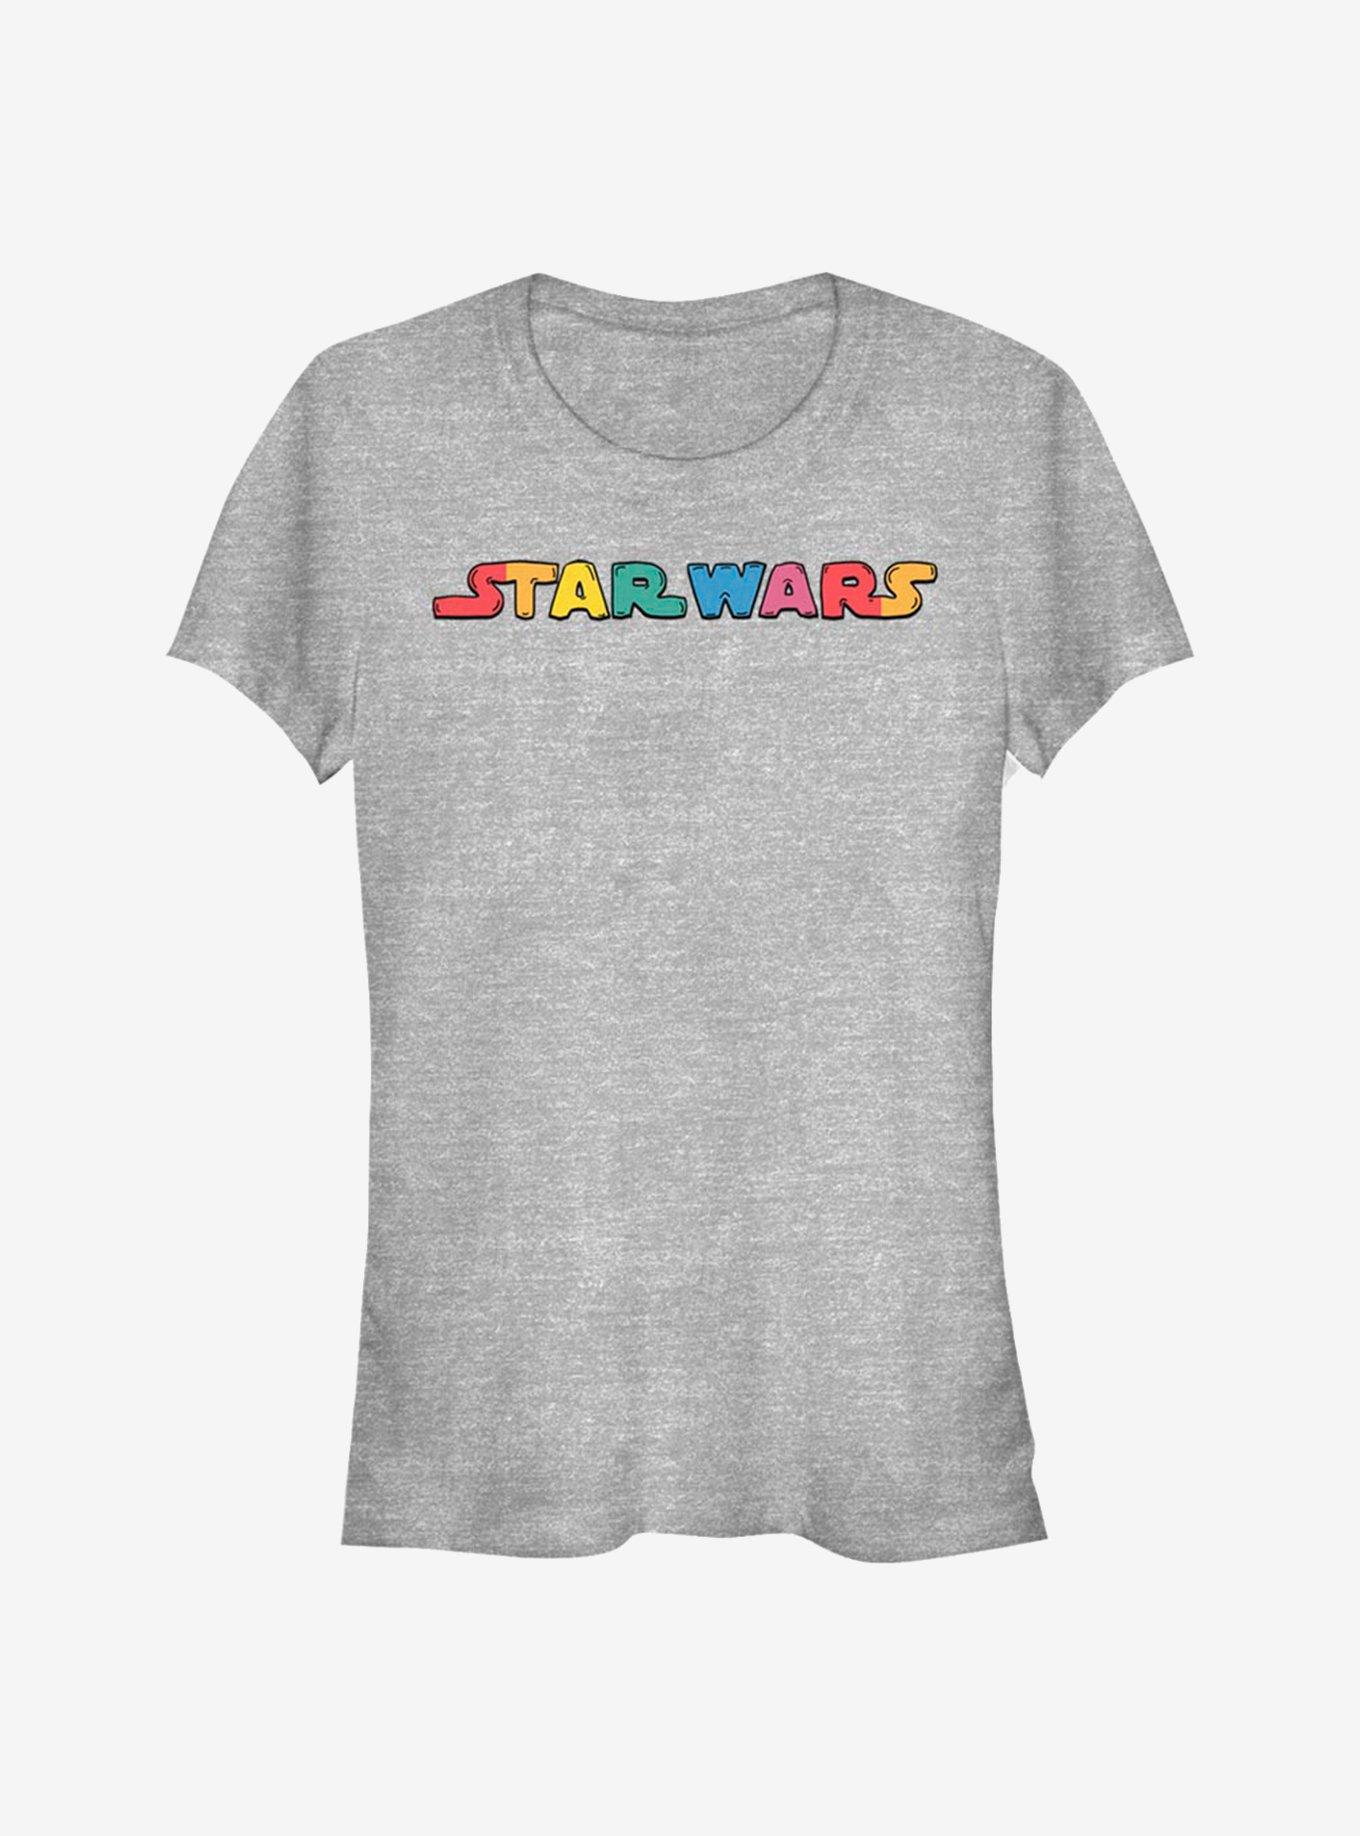 Star Wars Bold Text Rainbow Girls T-Shirt, ATH HTR, hi-res